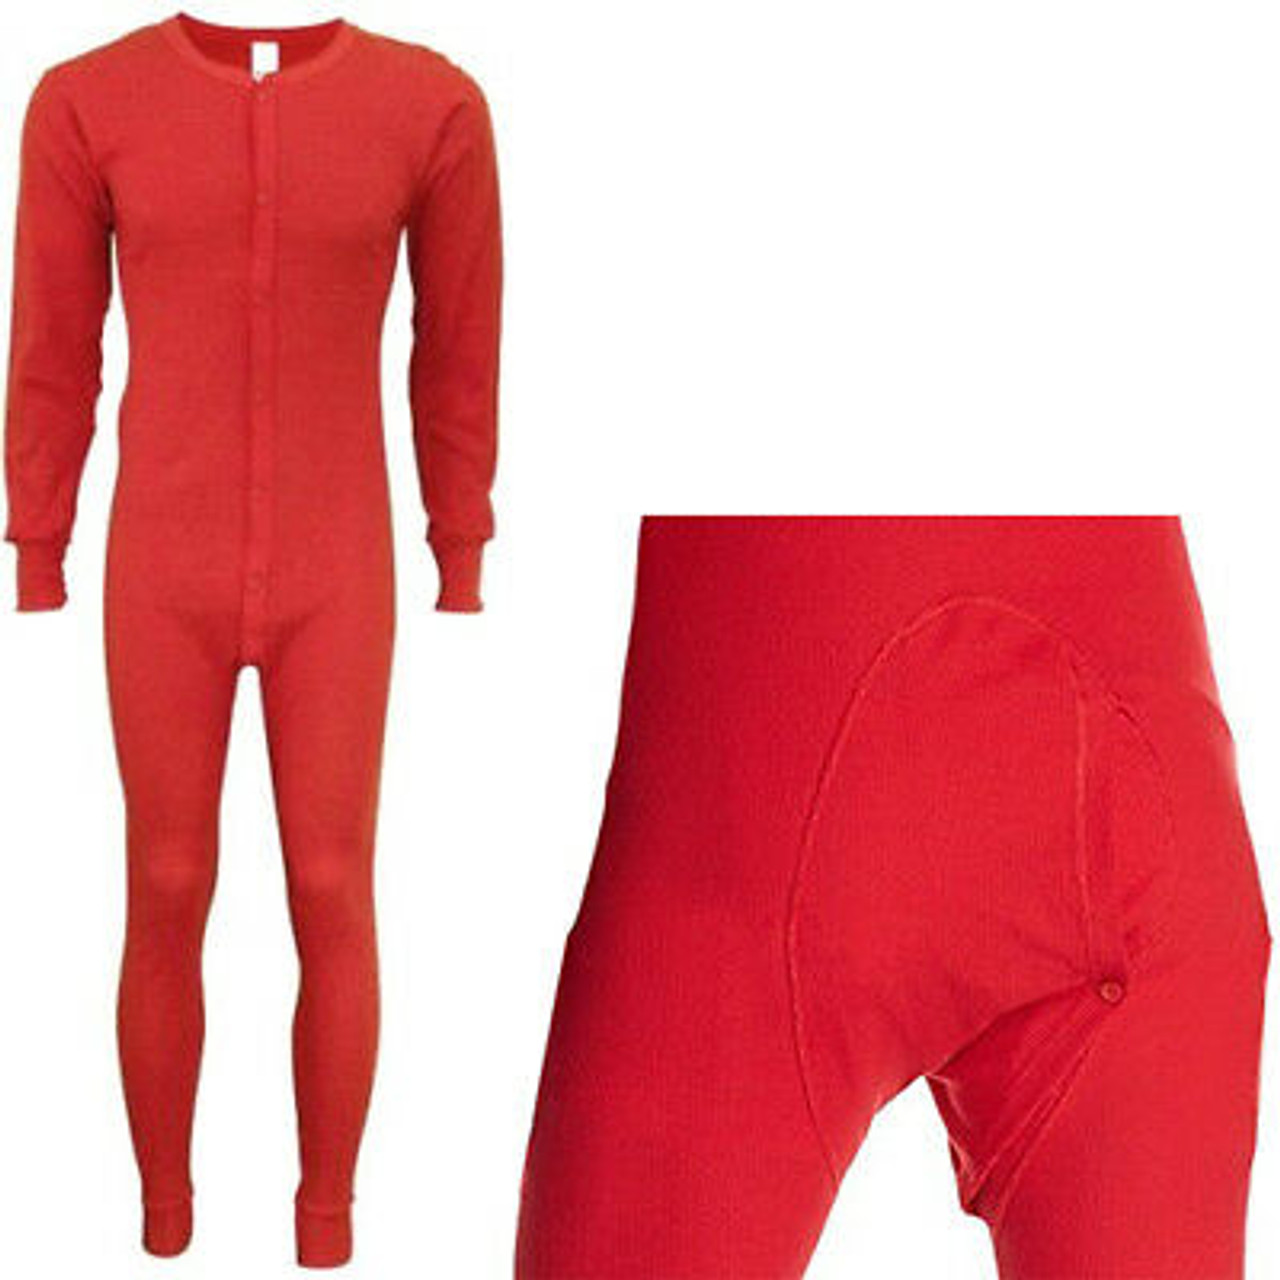 Union Suit - Red Long Johns